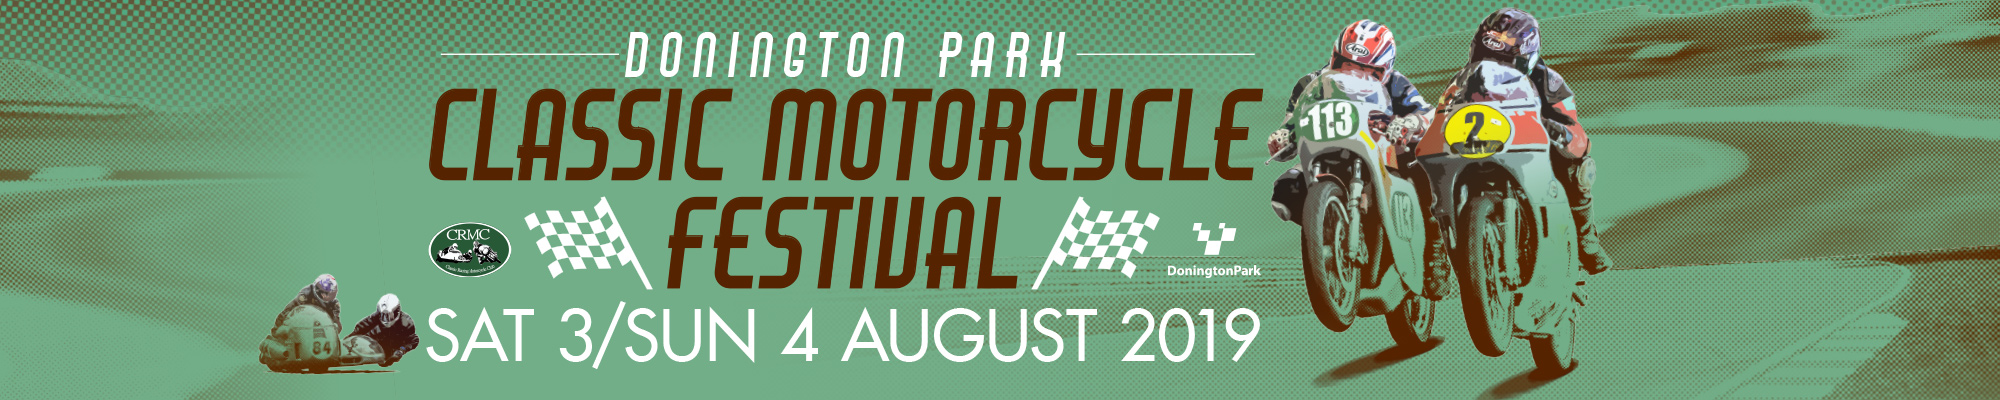 Donington Classic Motorcycle Festival 